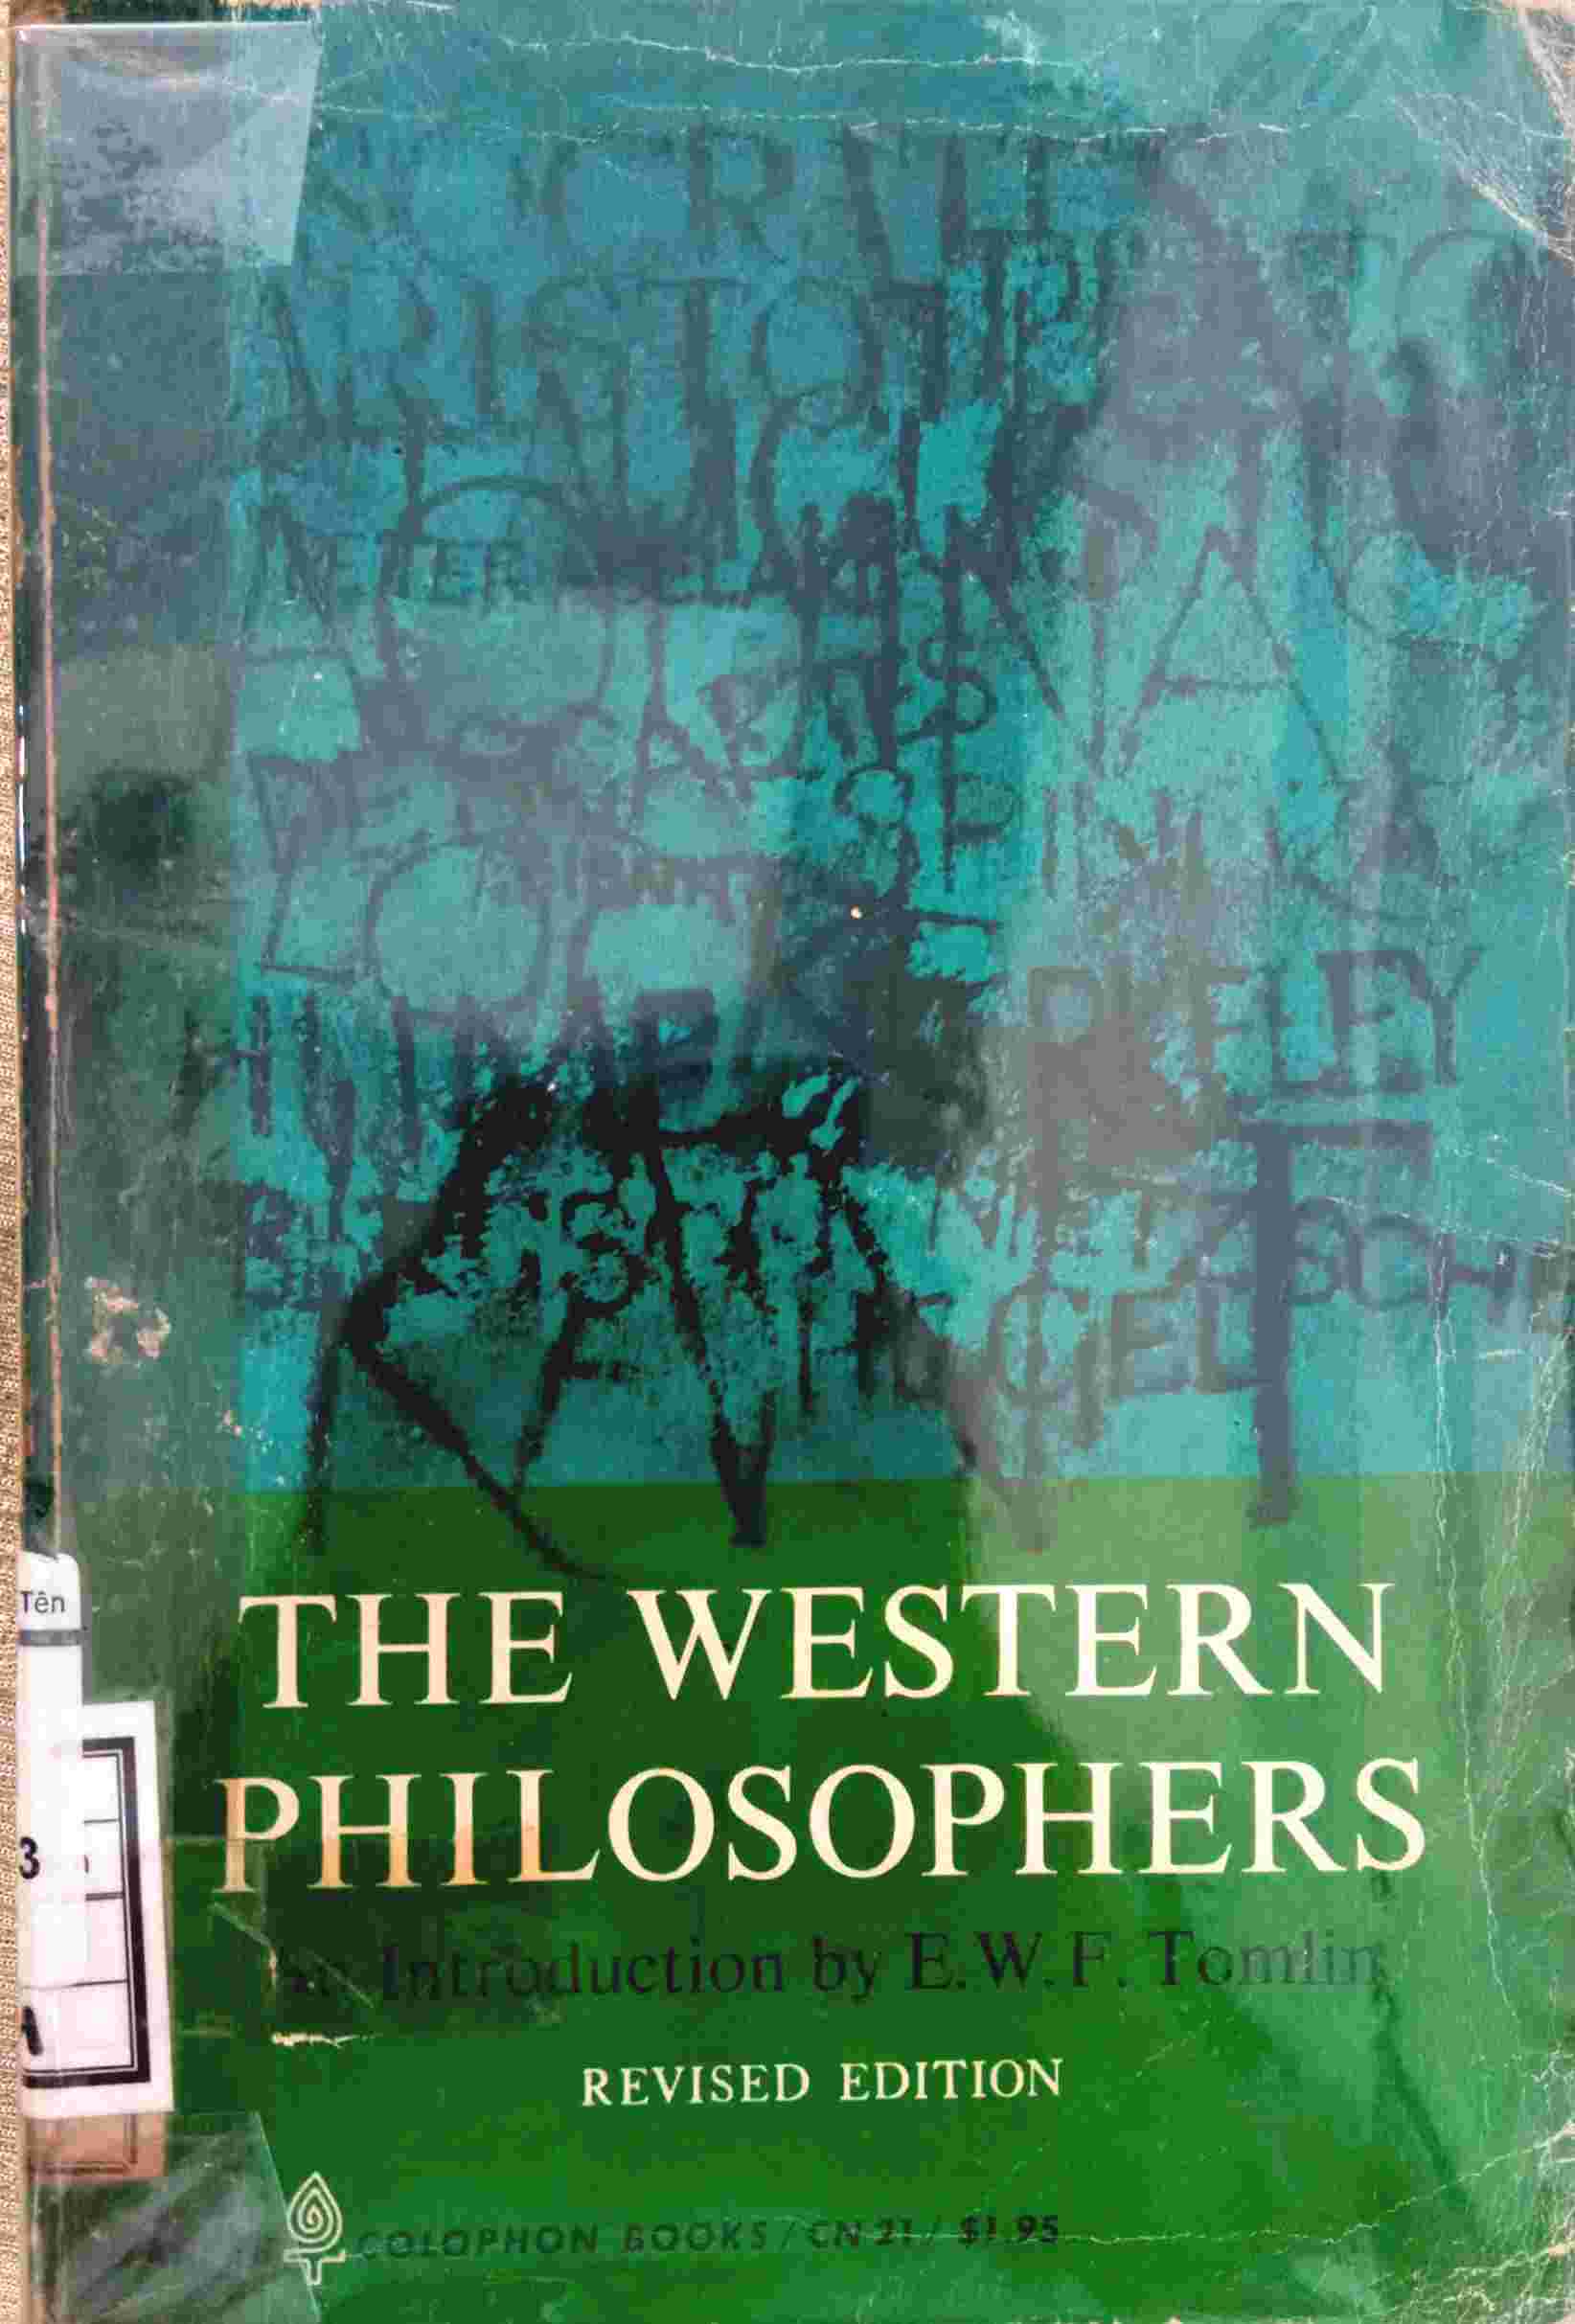 THE WESTERN PHILOSOPHERS